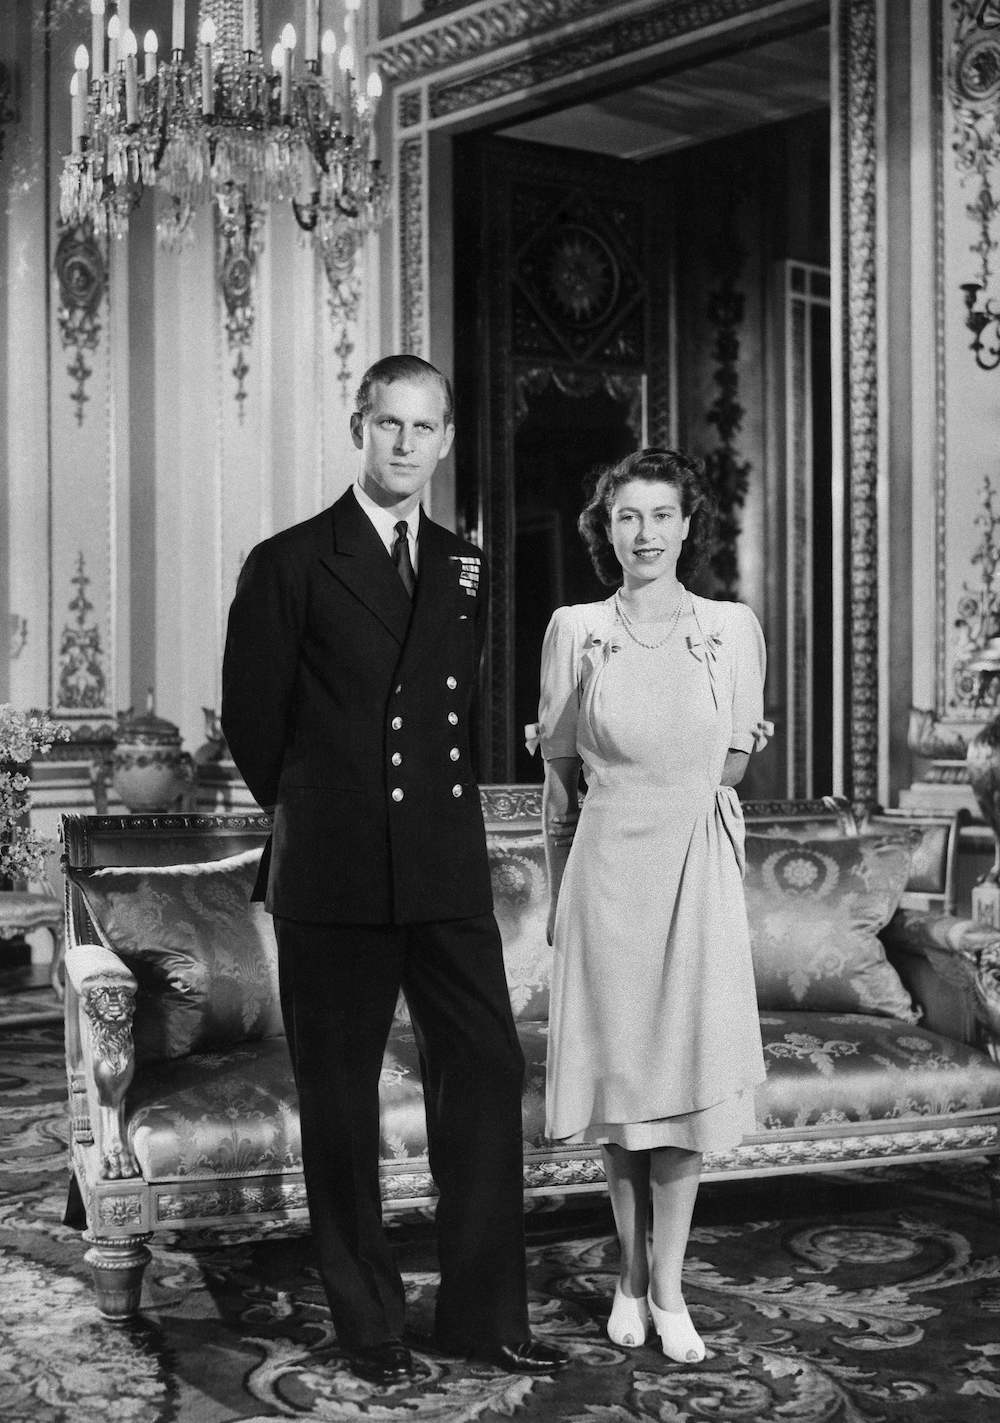 Princess Elizabeth and Philip Mountbatten, later Queen Elizabeth II and Prince Philip